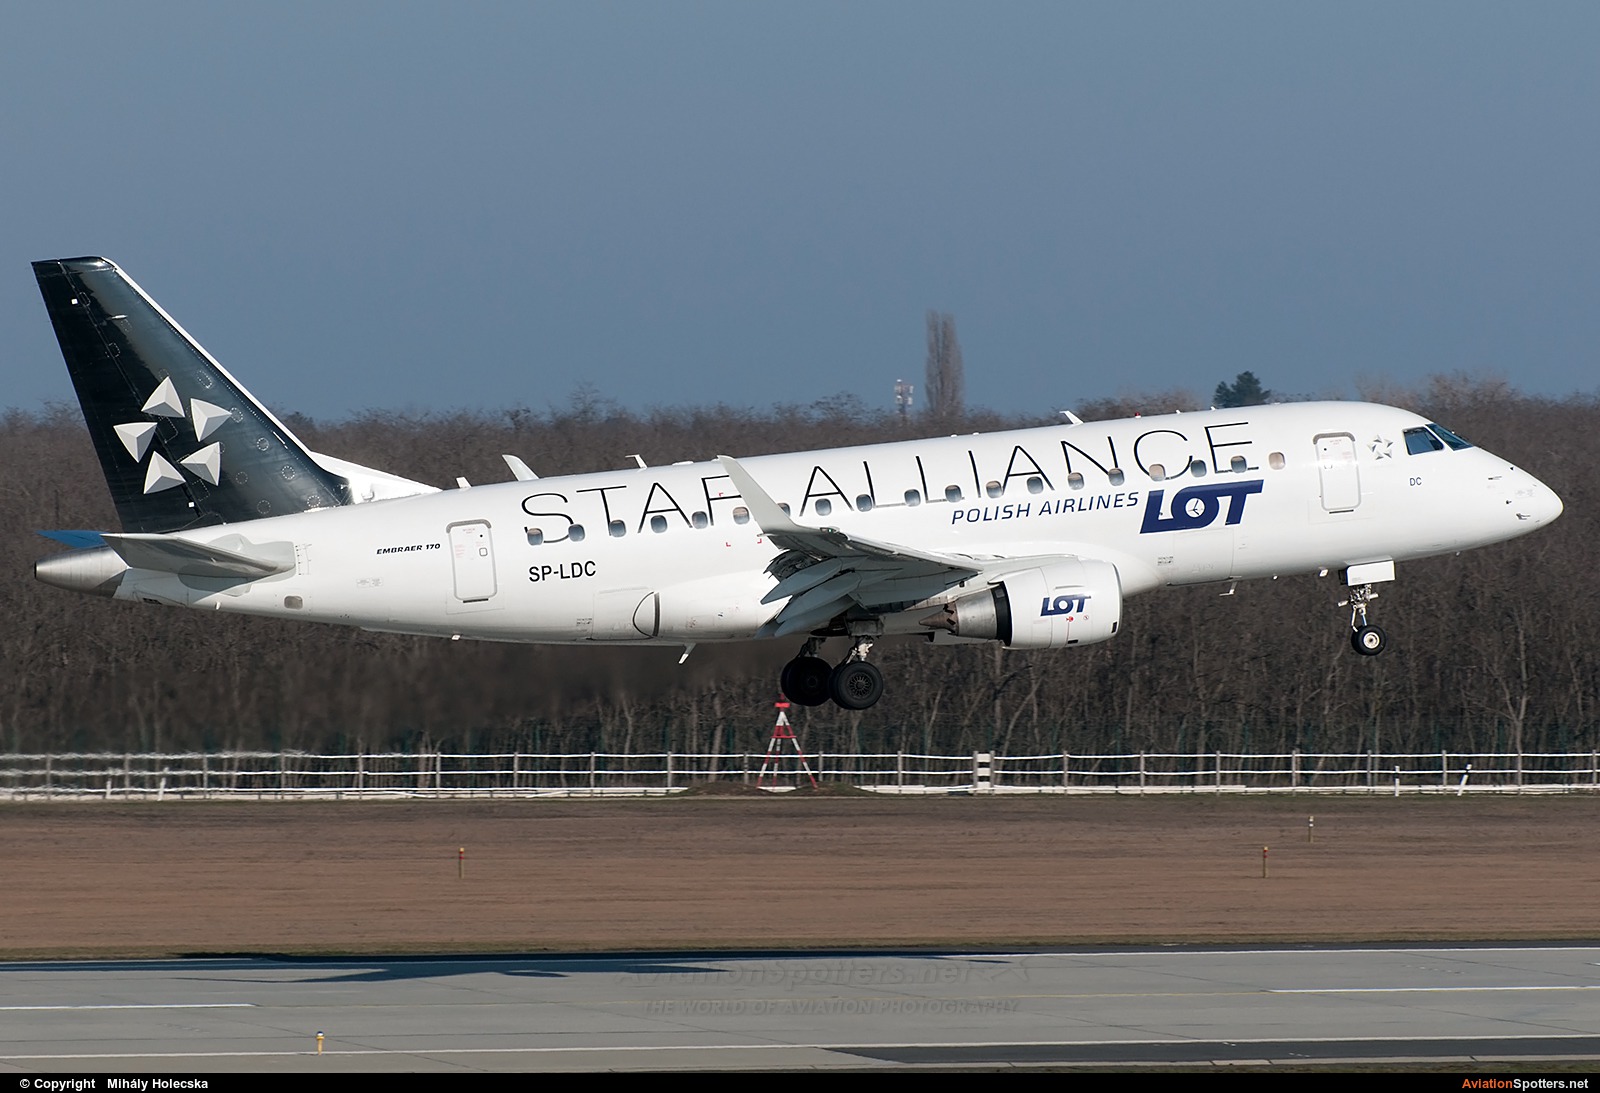 LOT - Polish Airlines  -  170  (SP-LDC) By Mihály Holecska (Misixx)